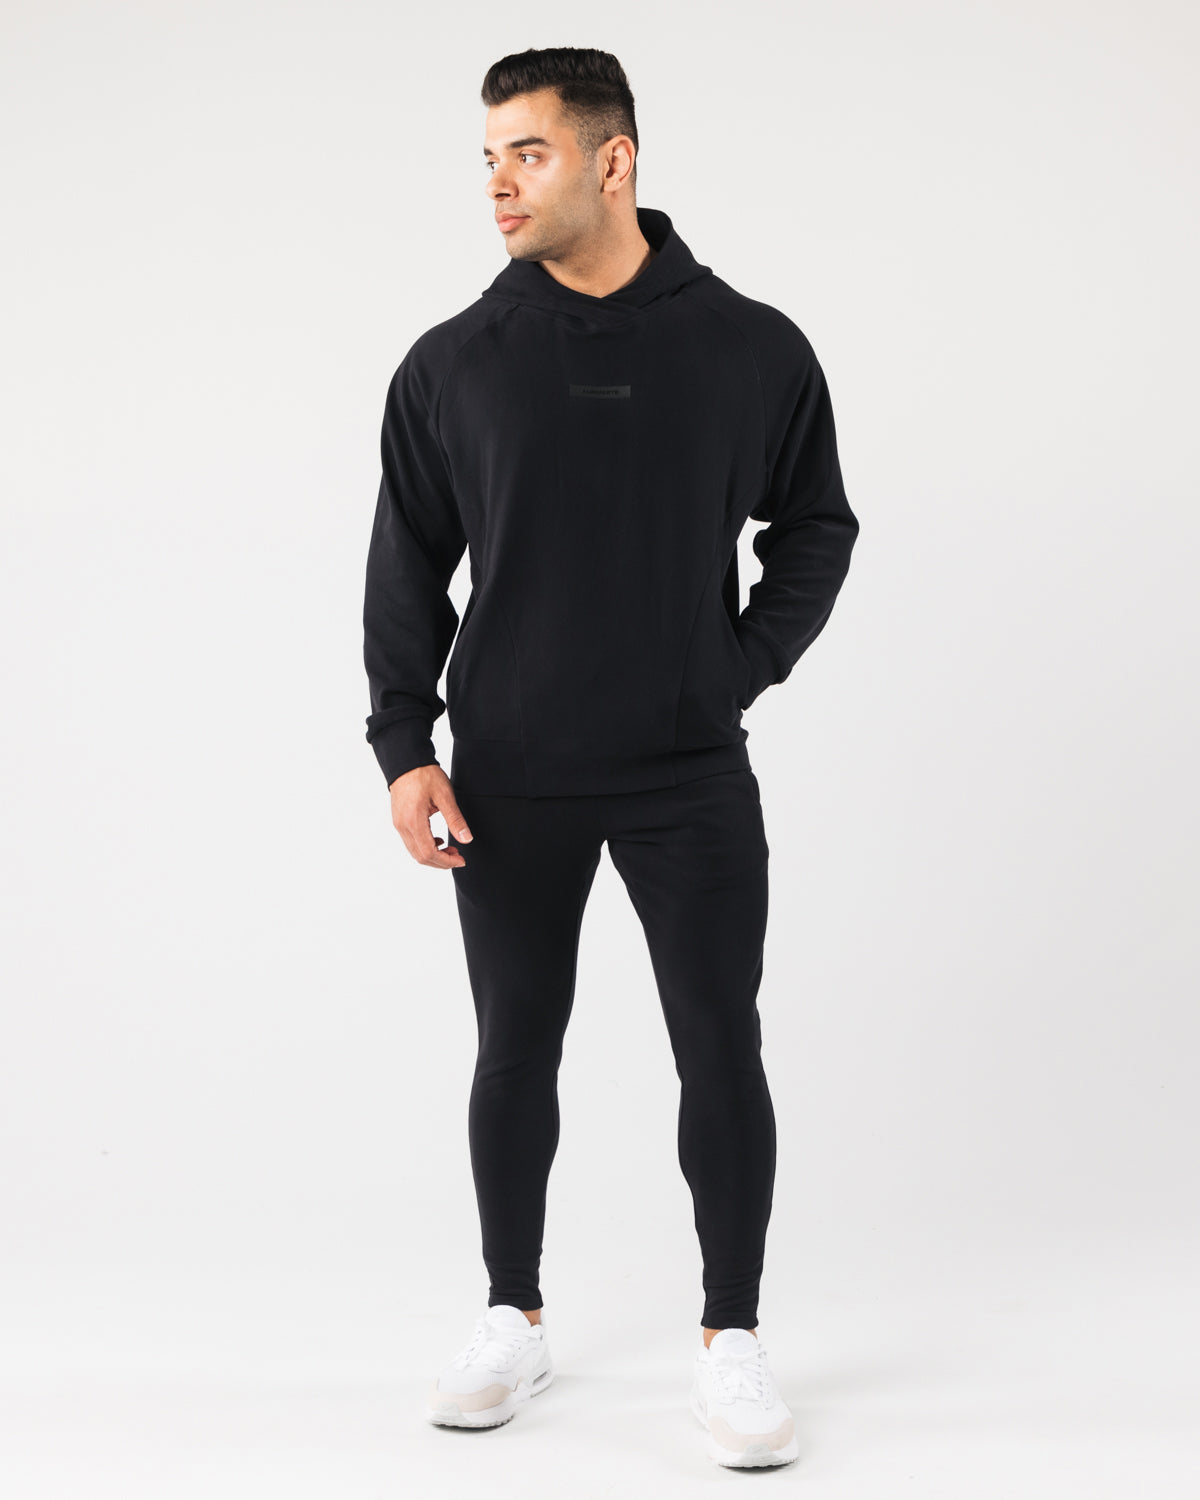 Alphalete Athletics Solid Black Pullover Hoodie Size M - 67% off